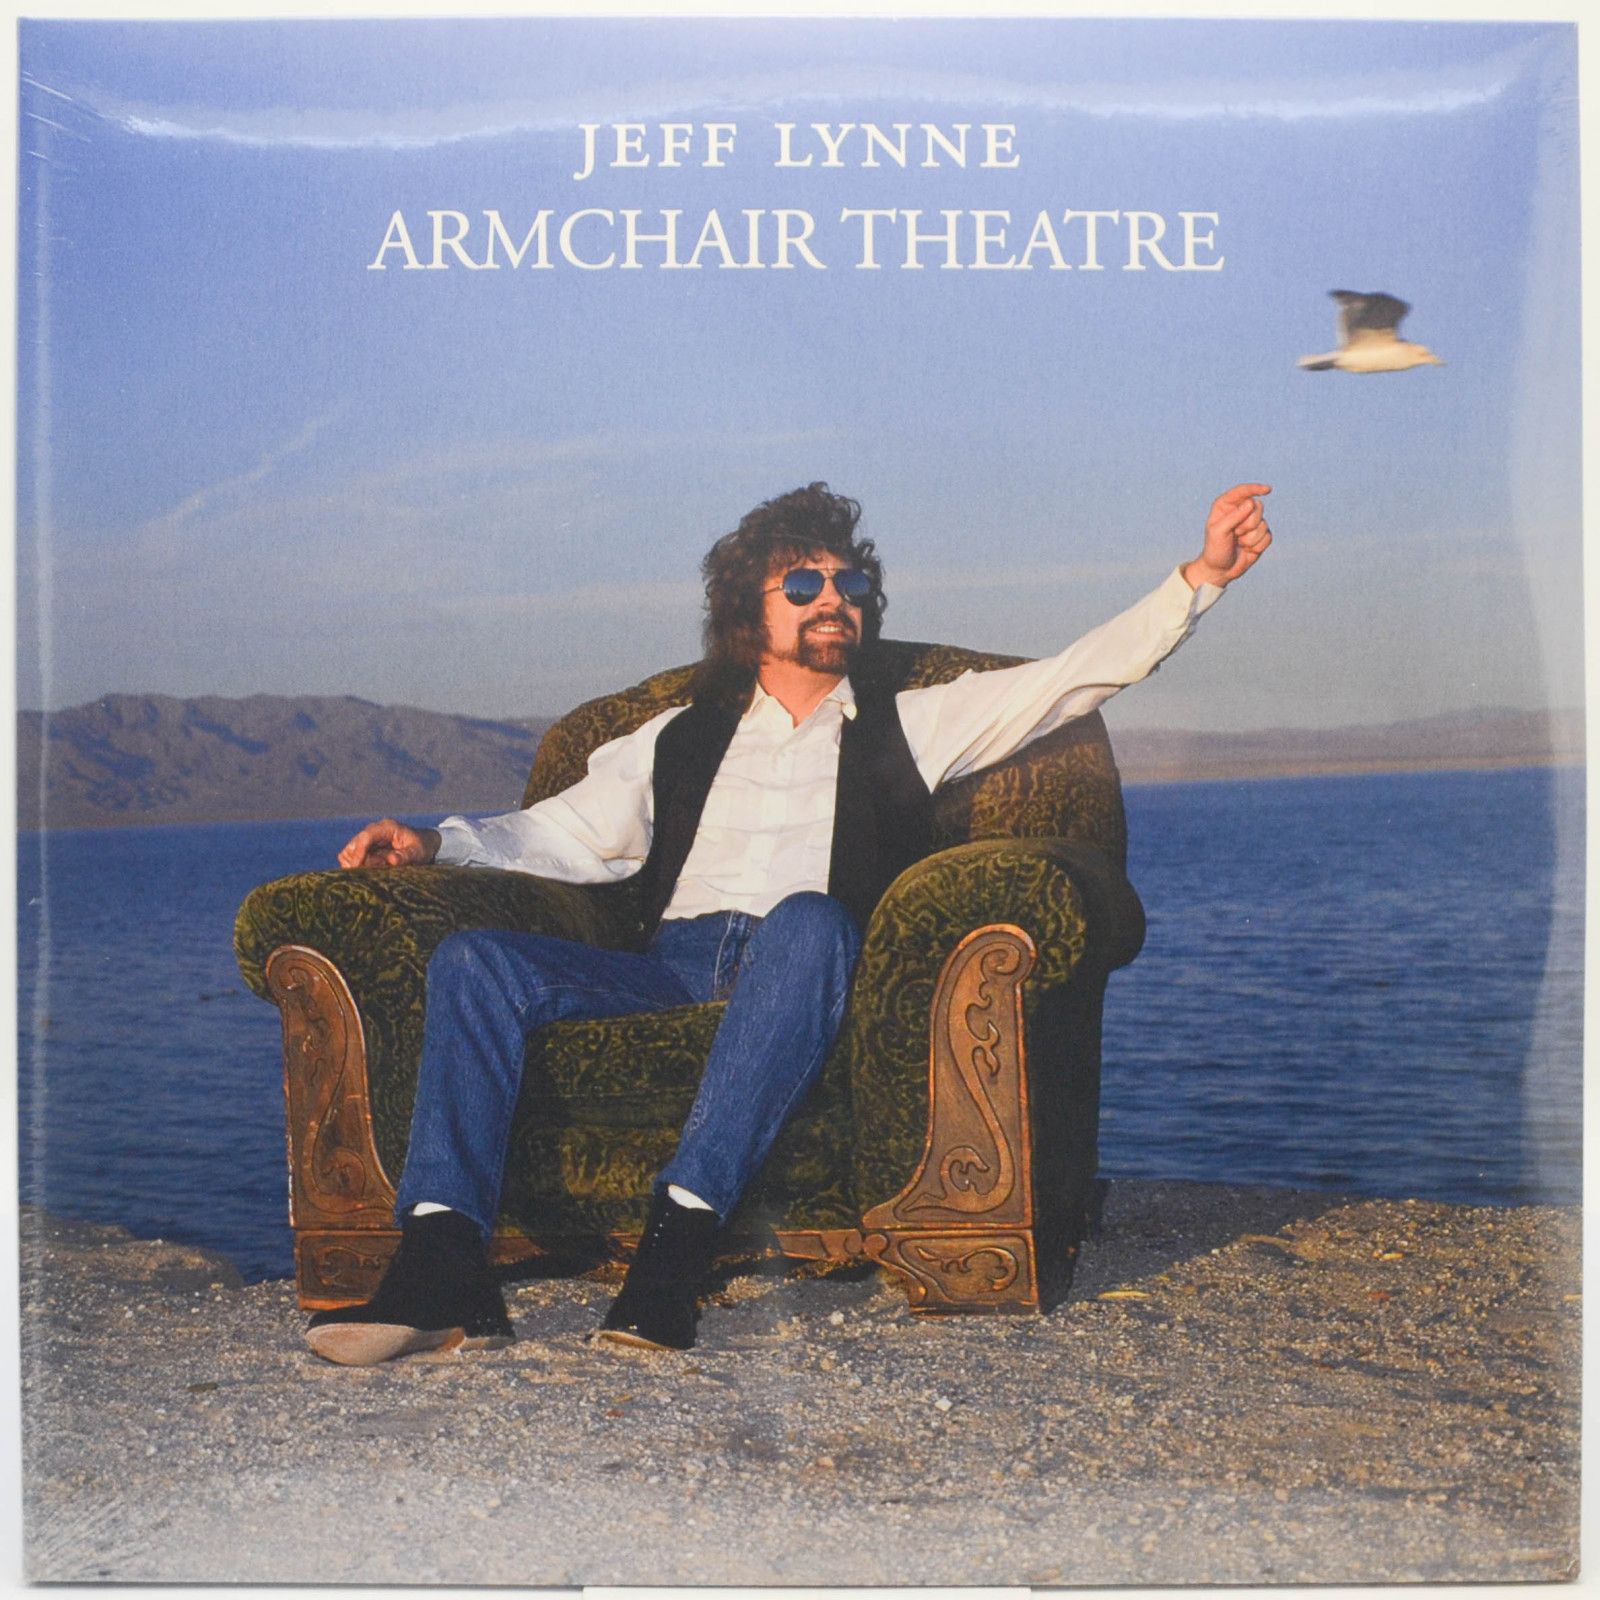 Jeff Lynne — Armchair Theatre (2LP, UK), 1990